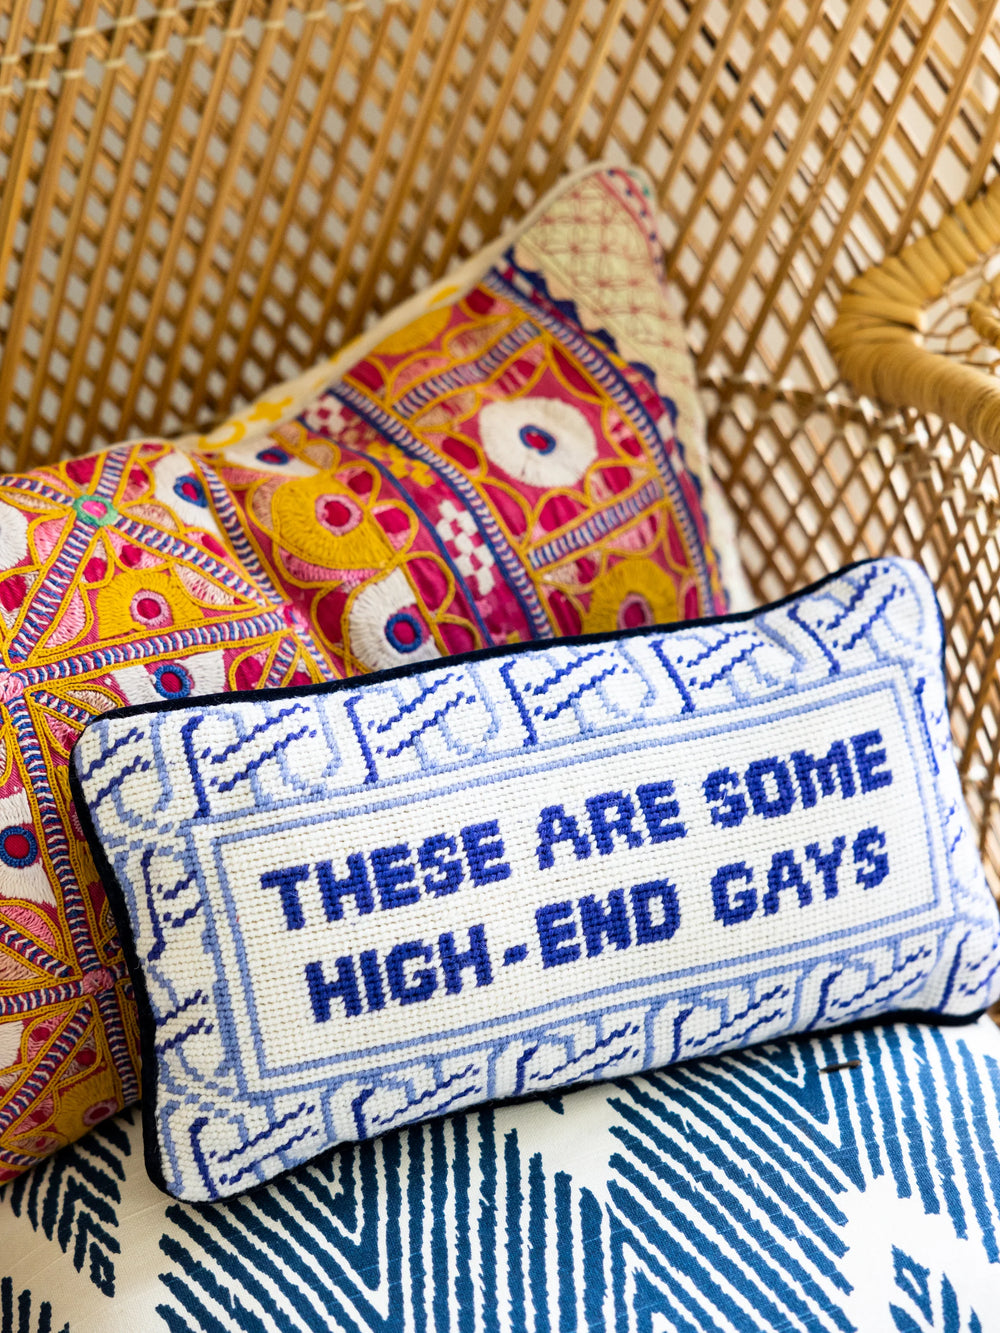 High-End Gays - Furbish - Ileana Makri store